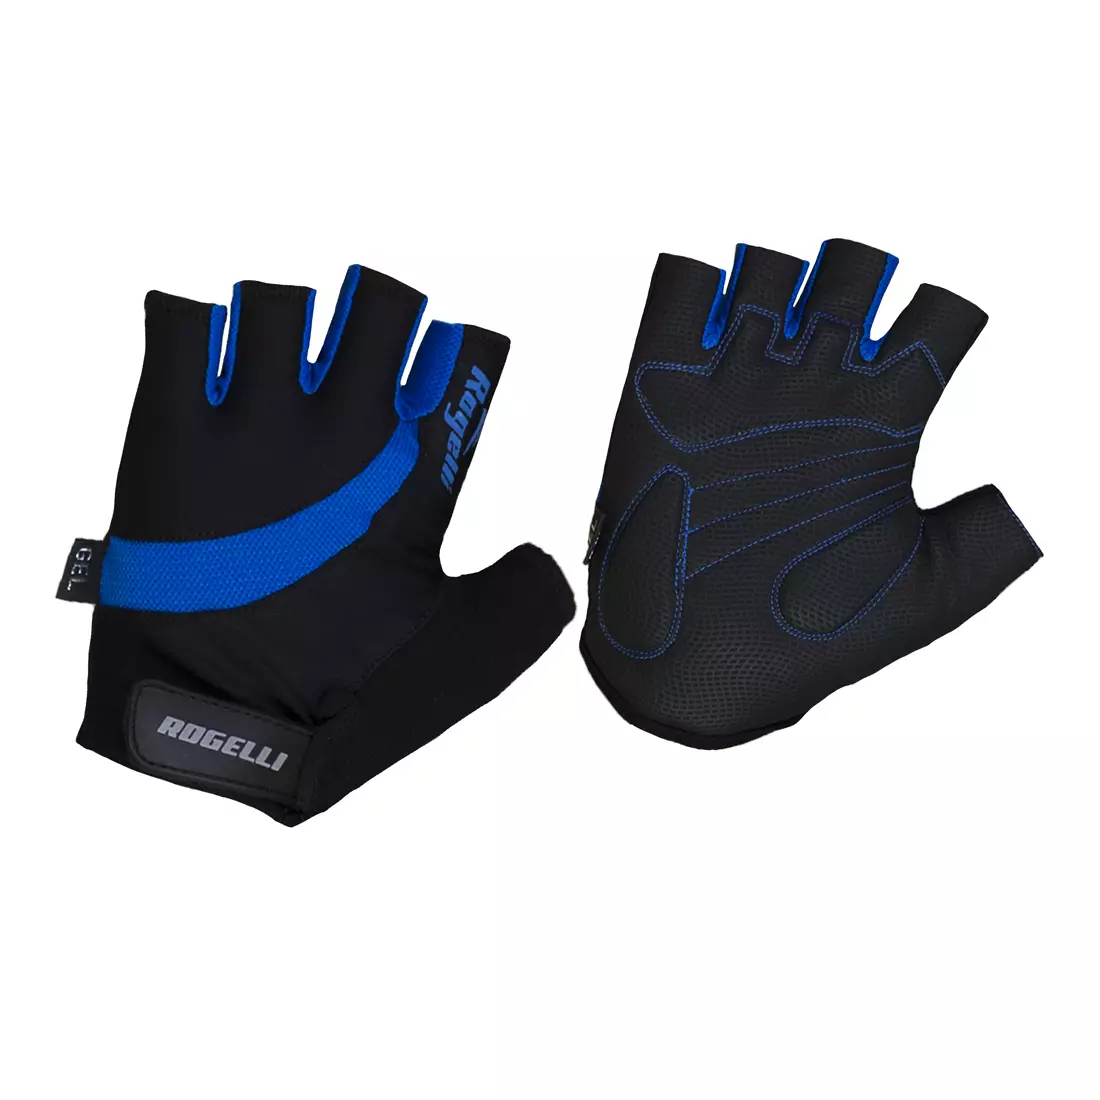 ROGELLI BIKE STRADA 006.350 - men's cycling gloves, black-blue